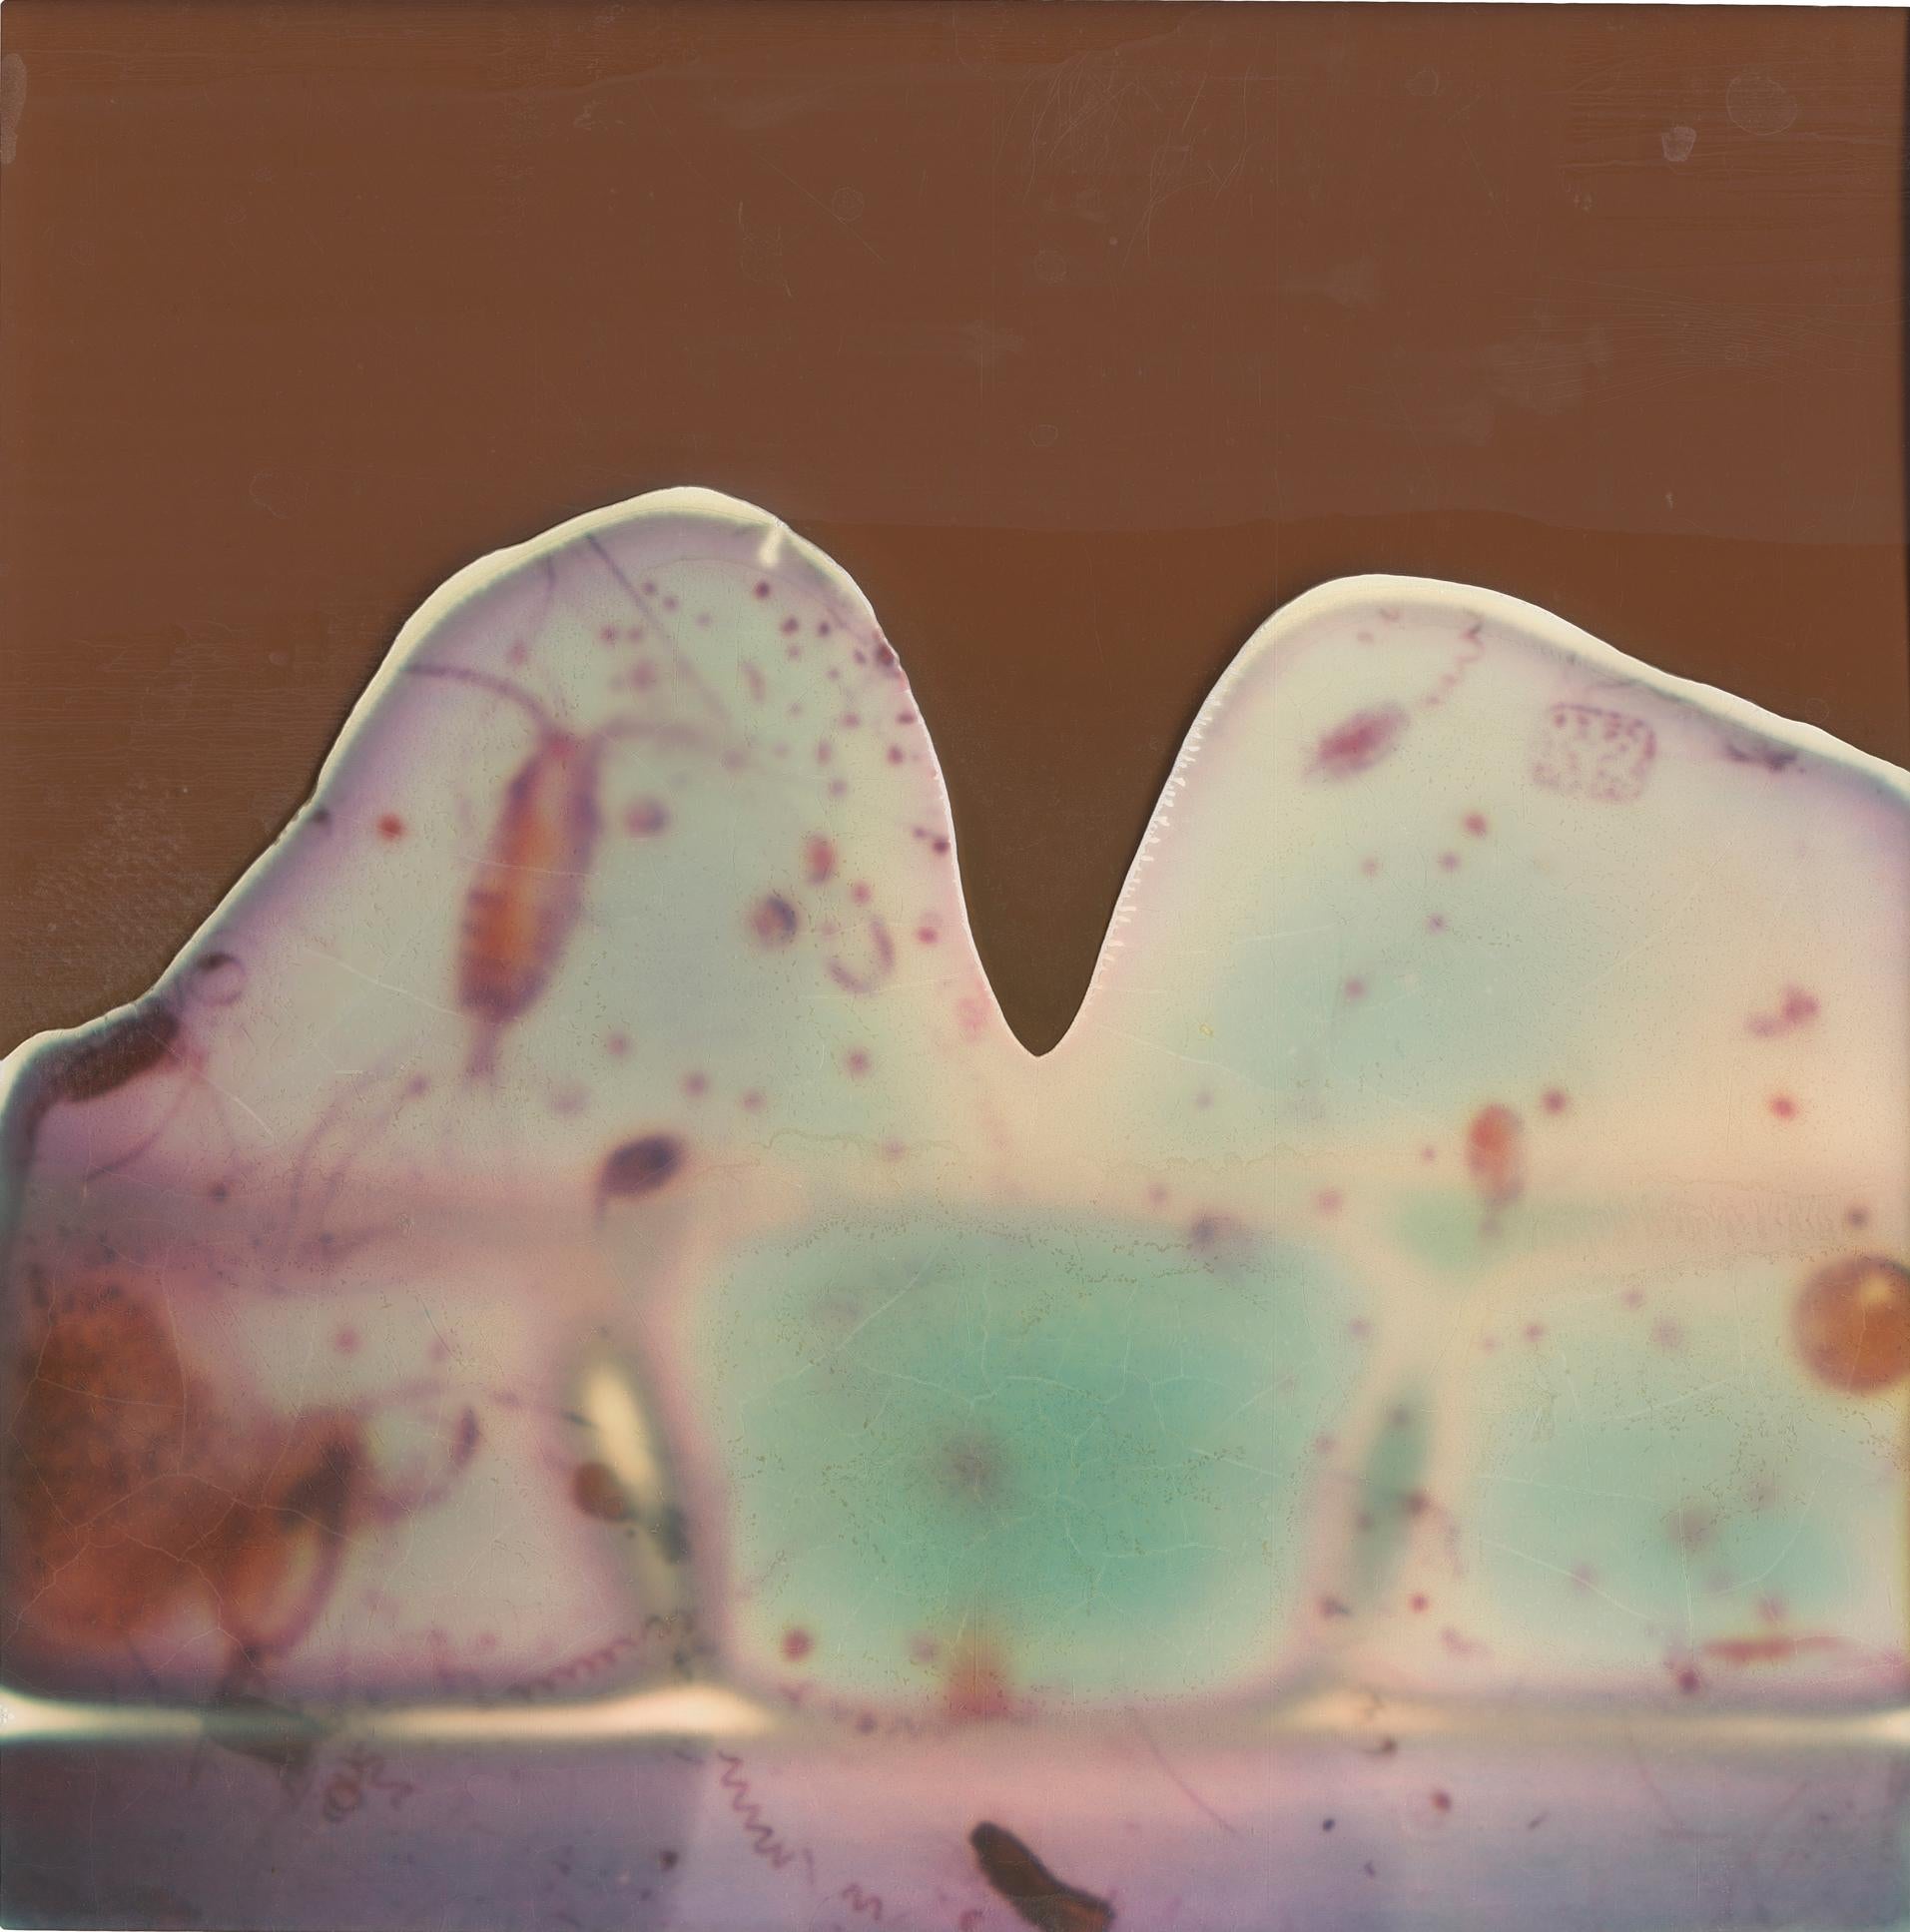 Stefanie Schneider Landscape Photograph - Through the looking Glass (Deconstructivism) - Contemporary, Expired Polaroid